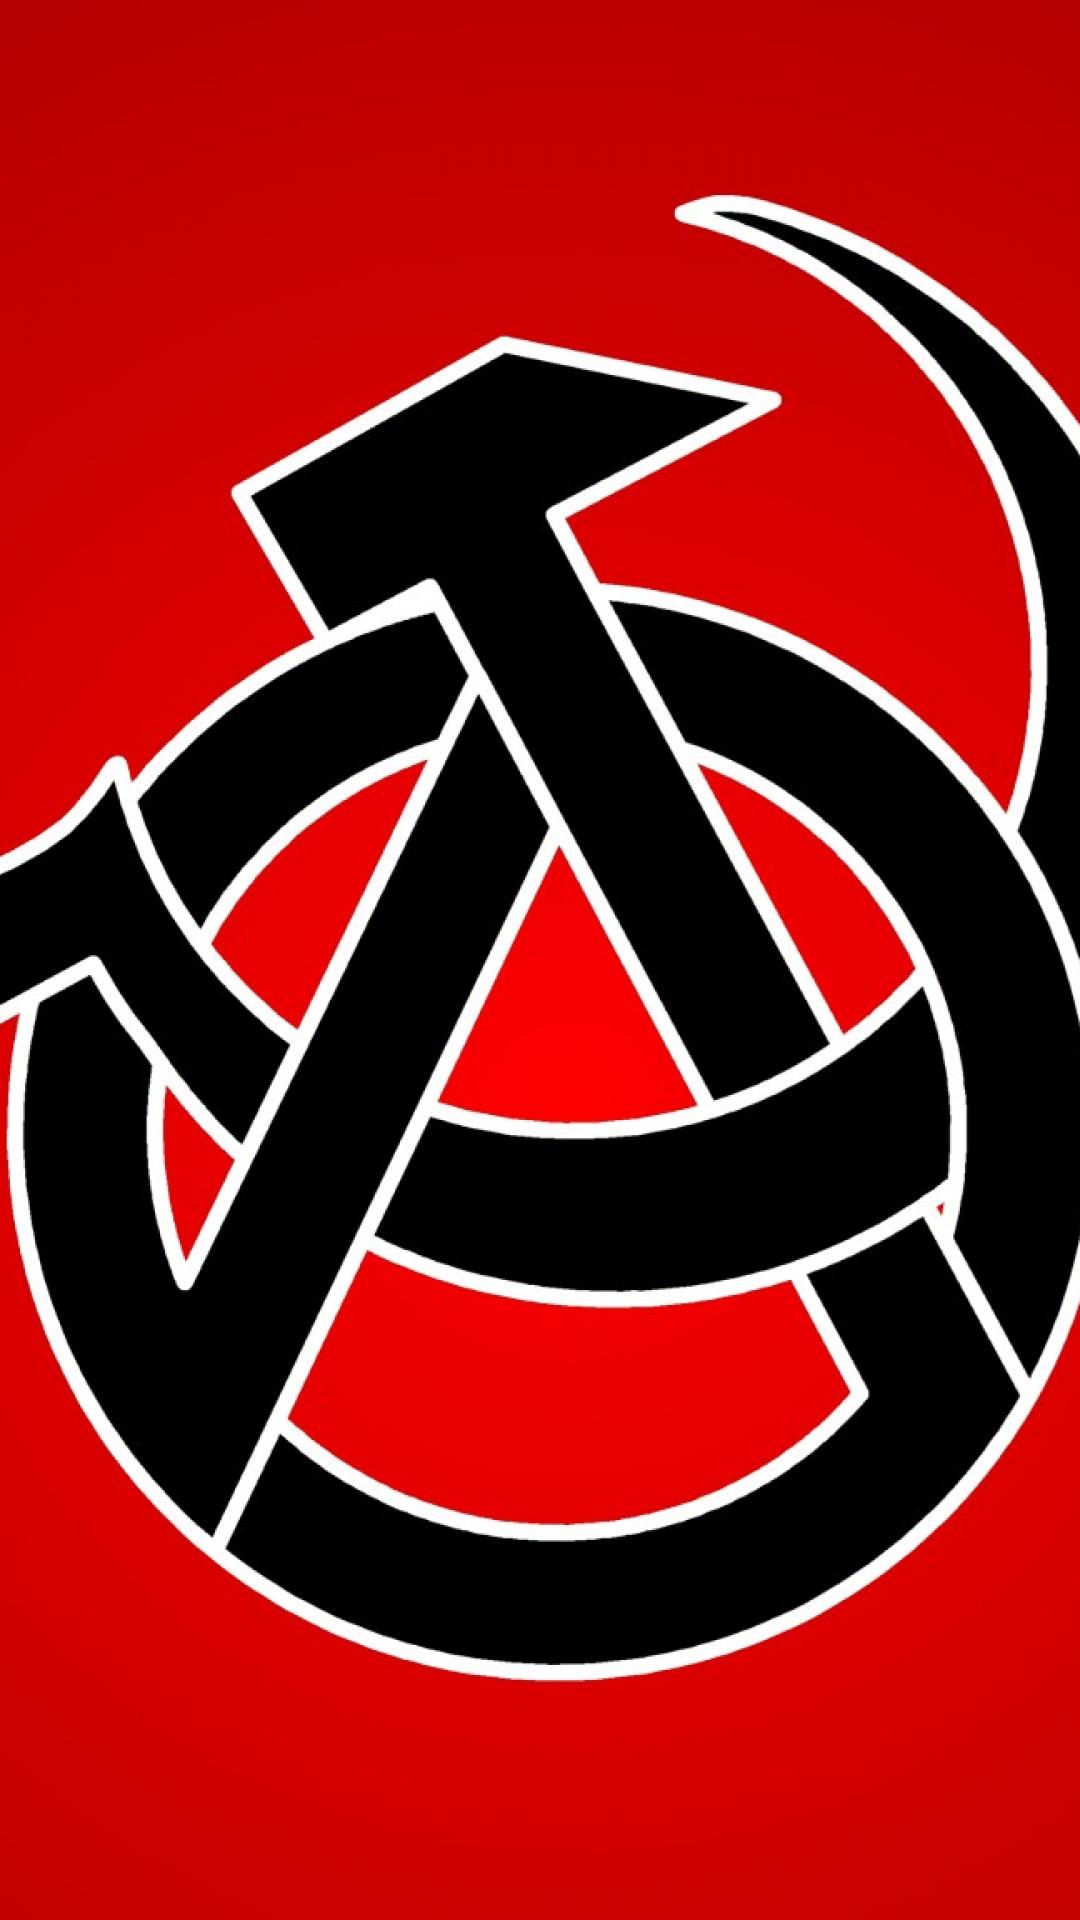 Анархо-коммунизм символика синдикализм